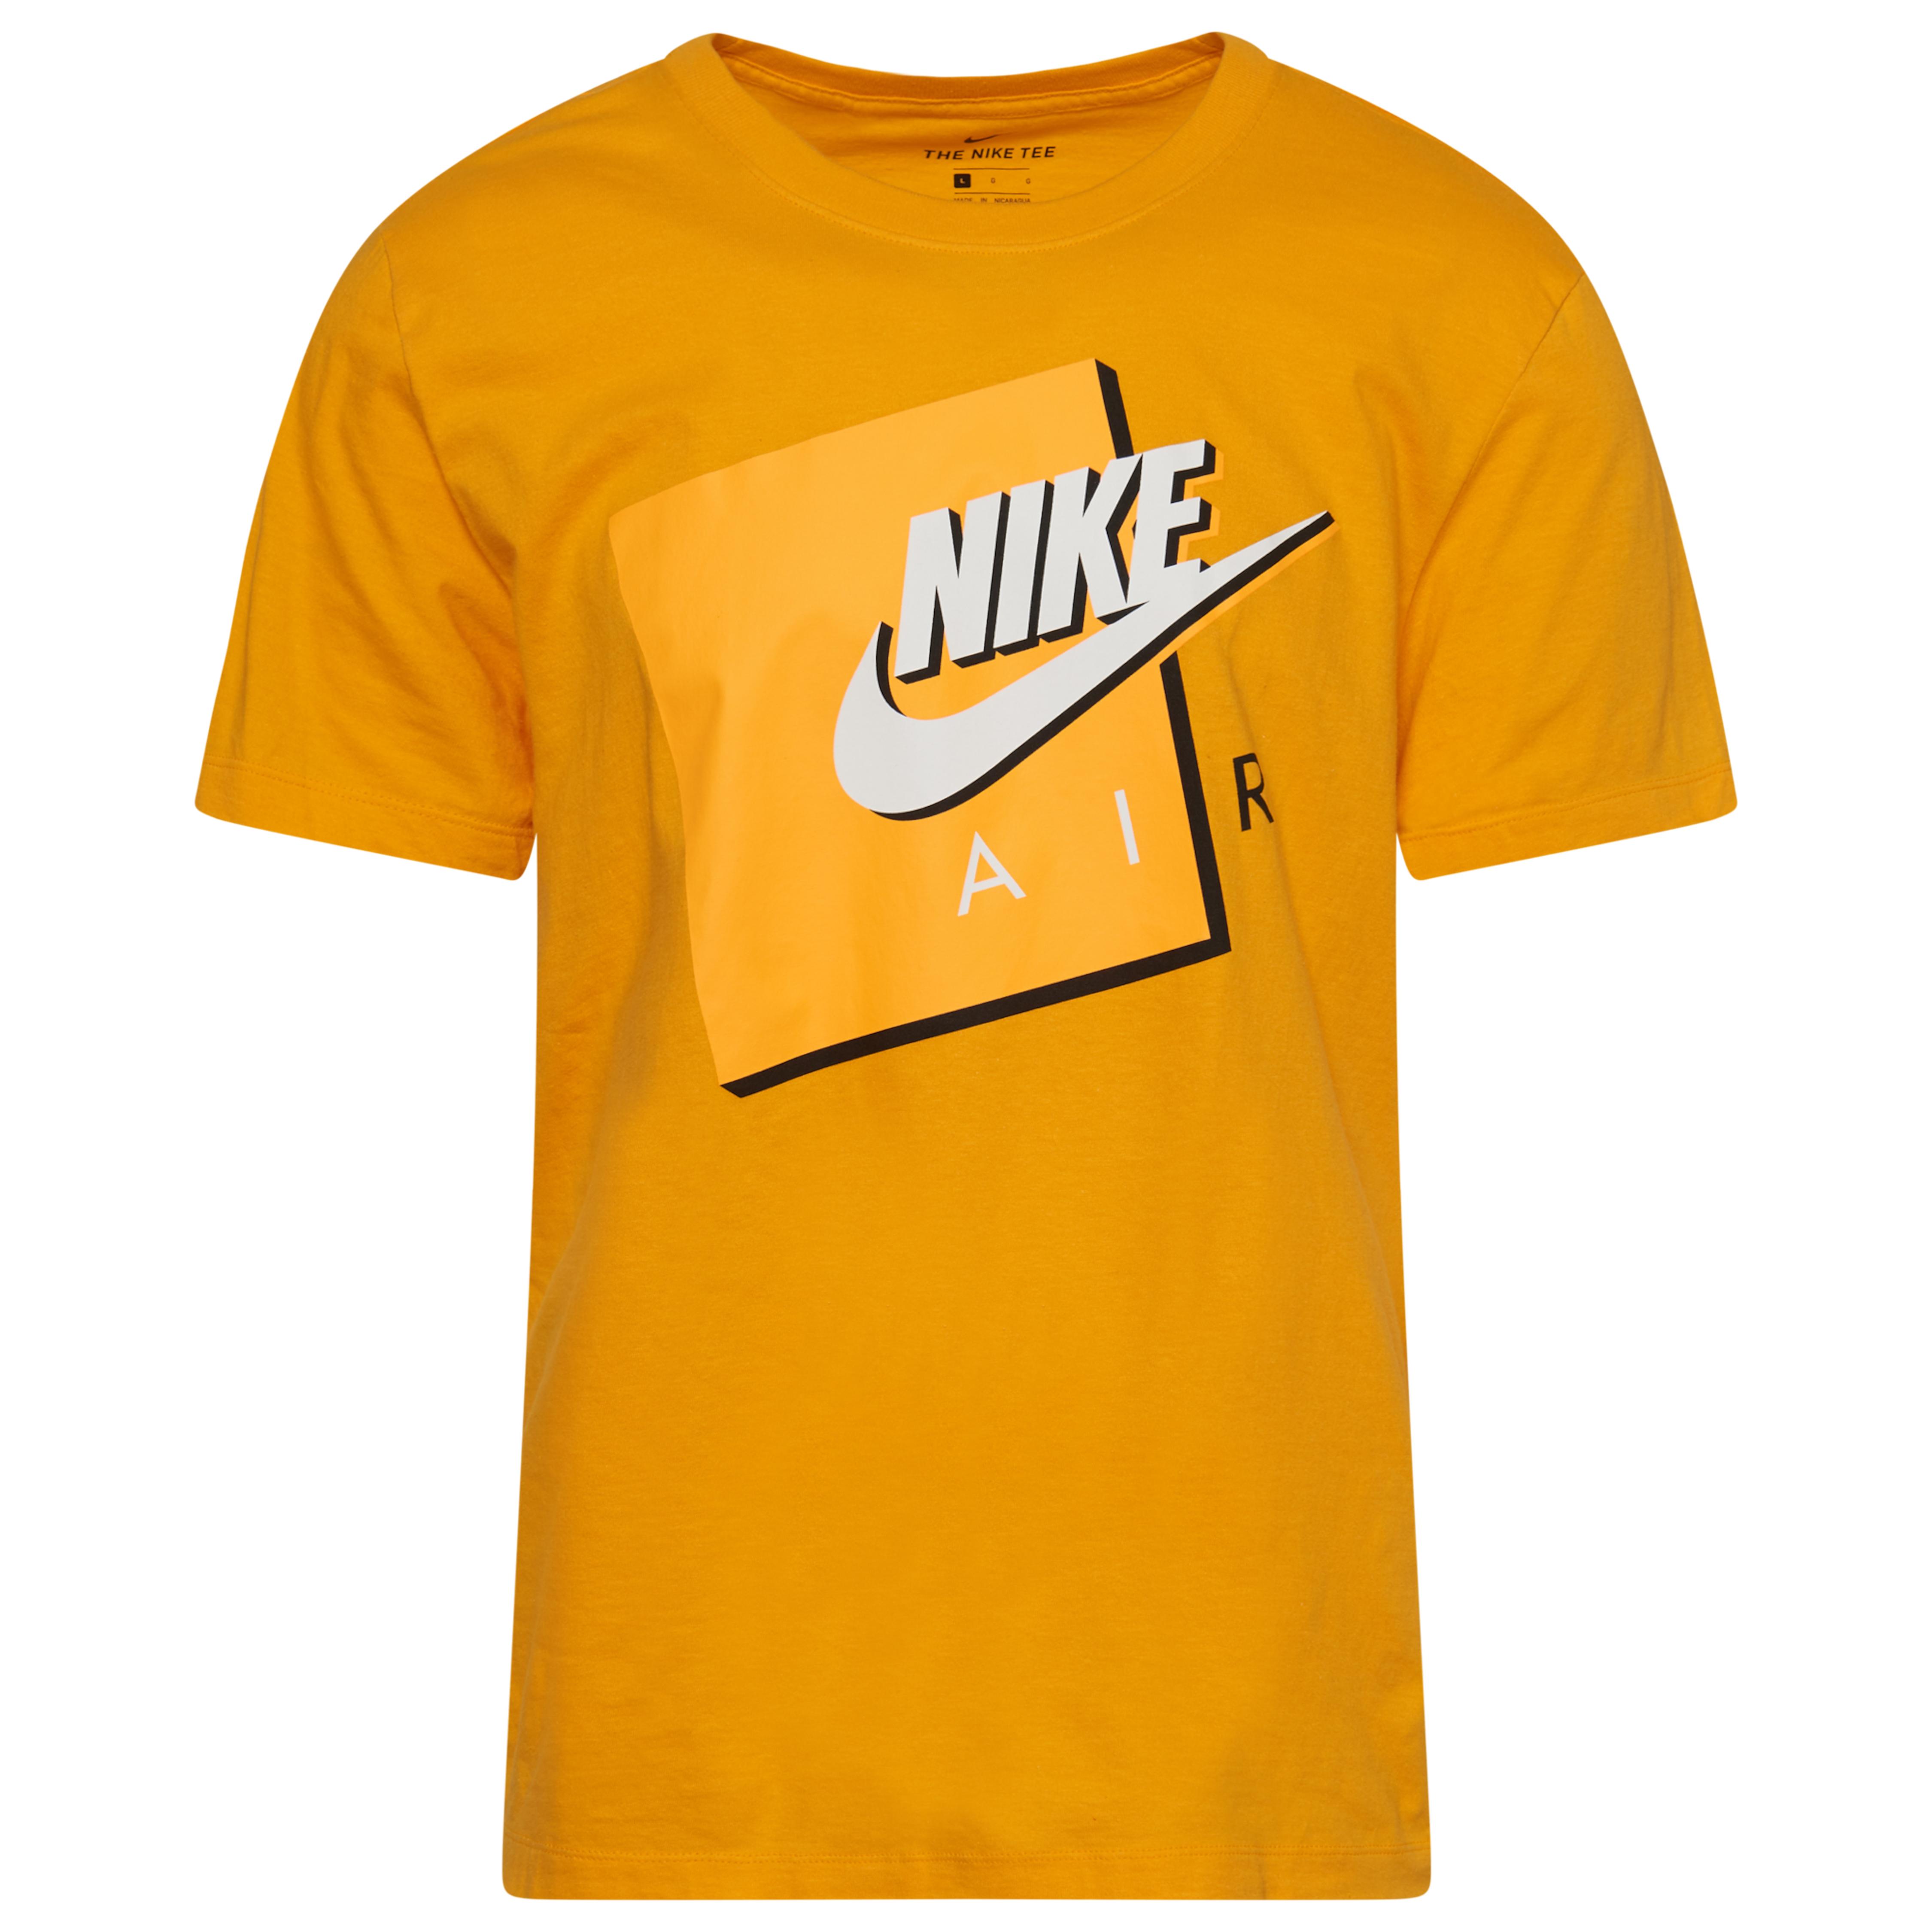 Nike Cotton Air Box T-shirt in University Gold/Orange/White (Orange) for  Men | Lyst